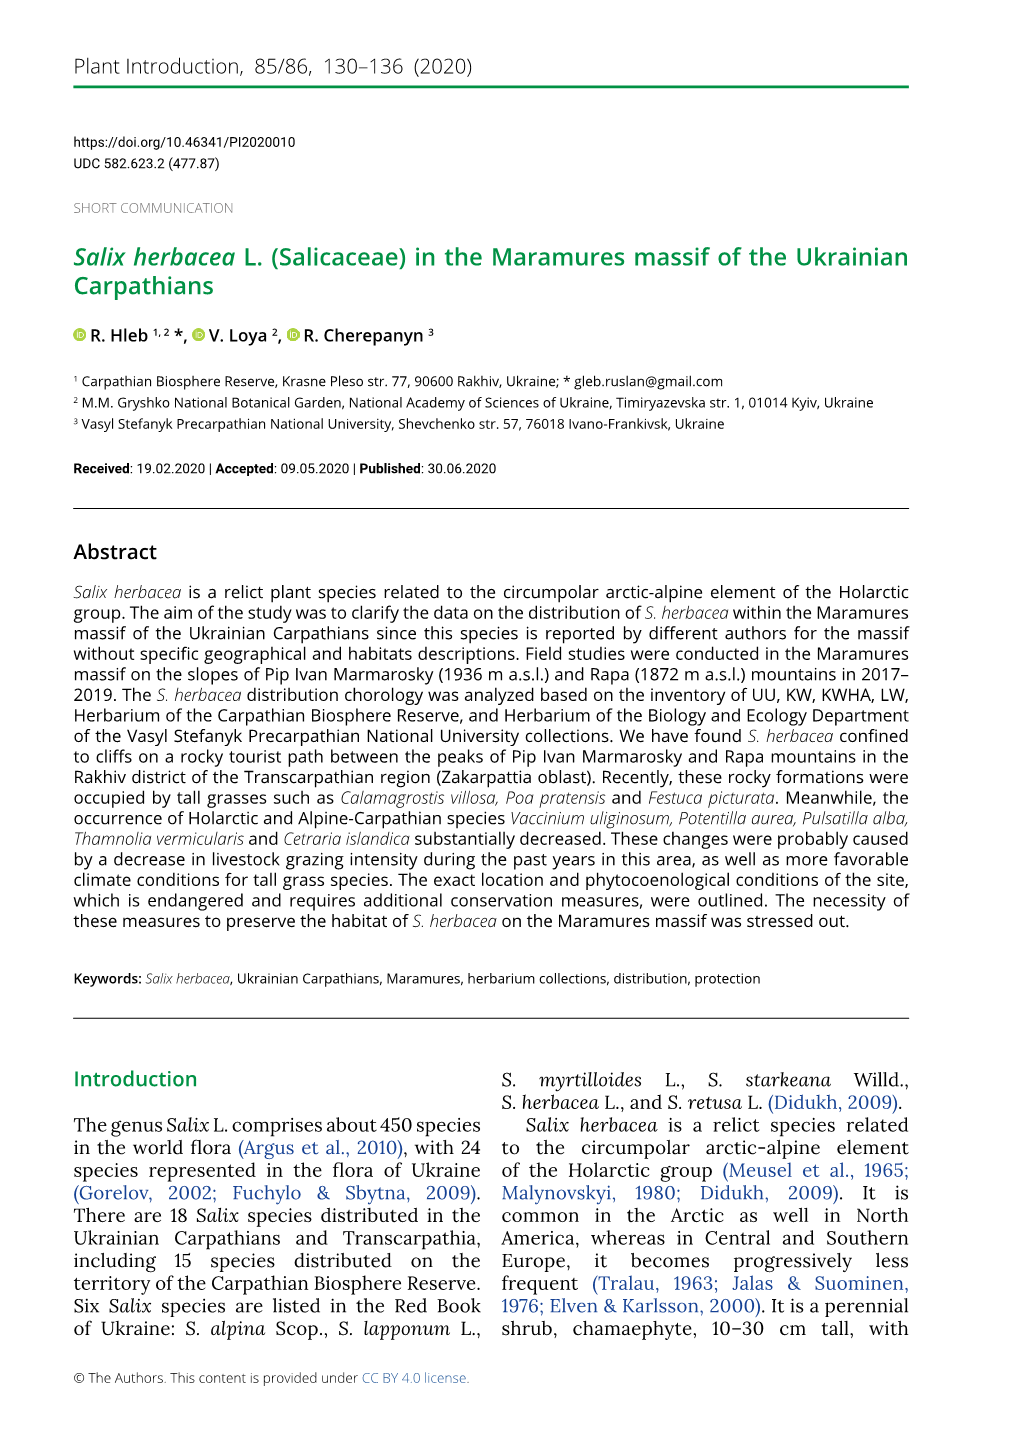 Salix Herbacea L. (Salicaceae) in the Maramures Massif of the Ukrainian Carpathians